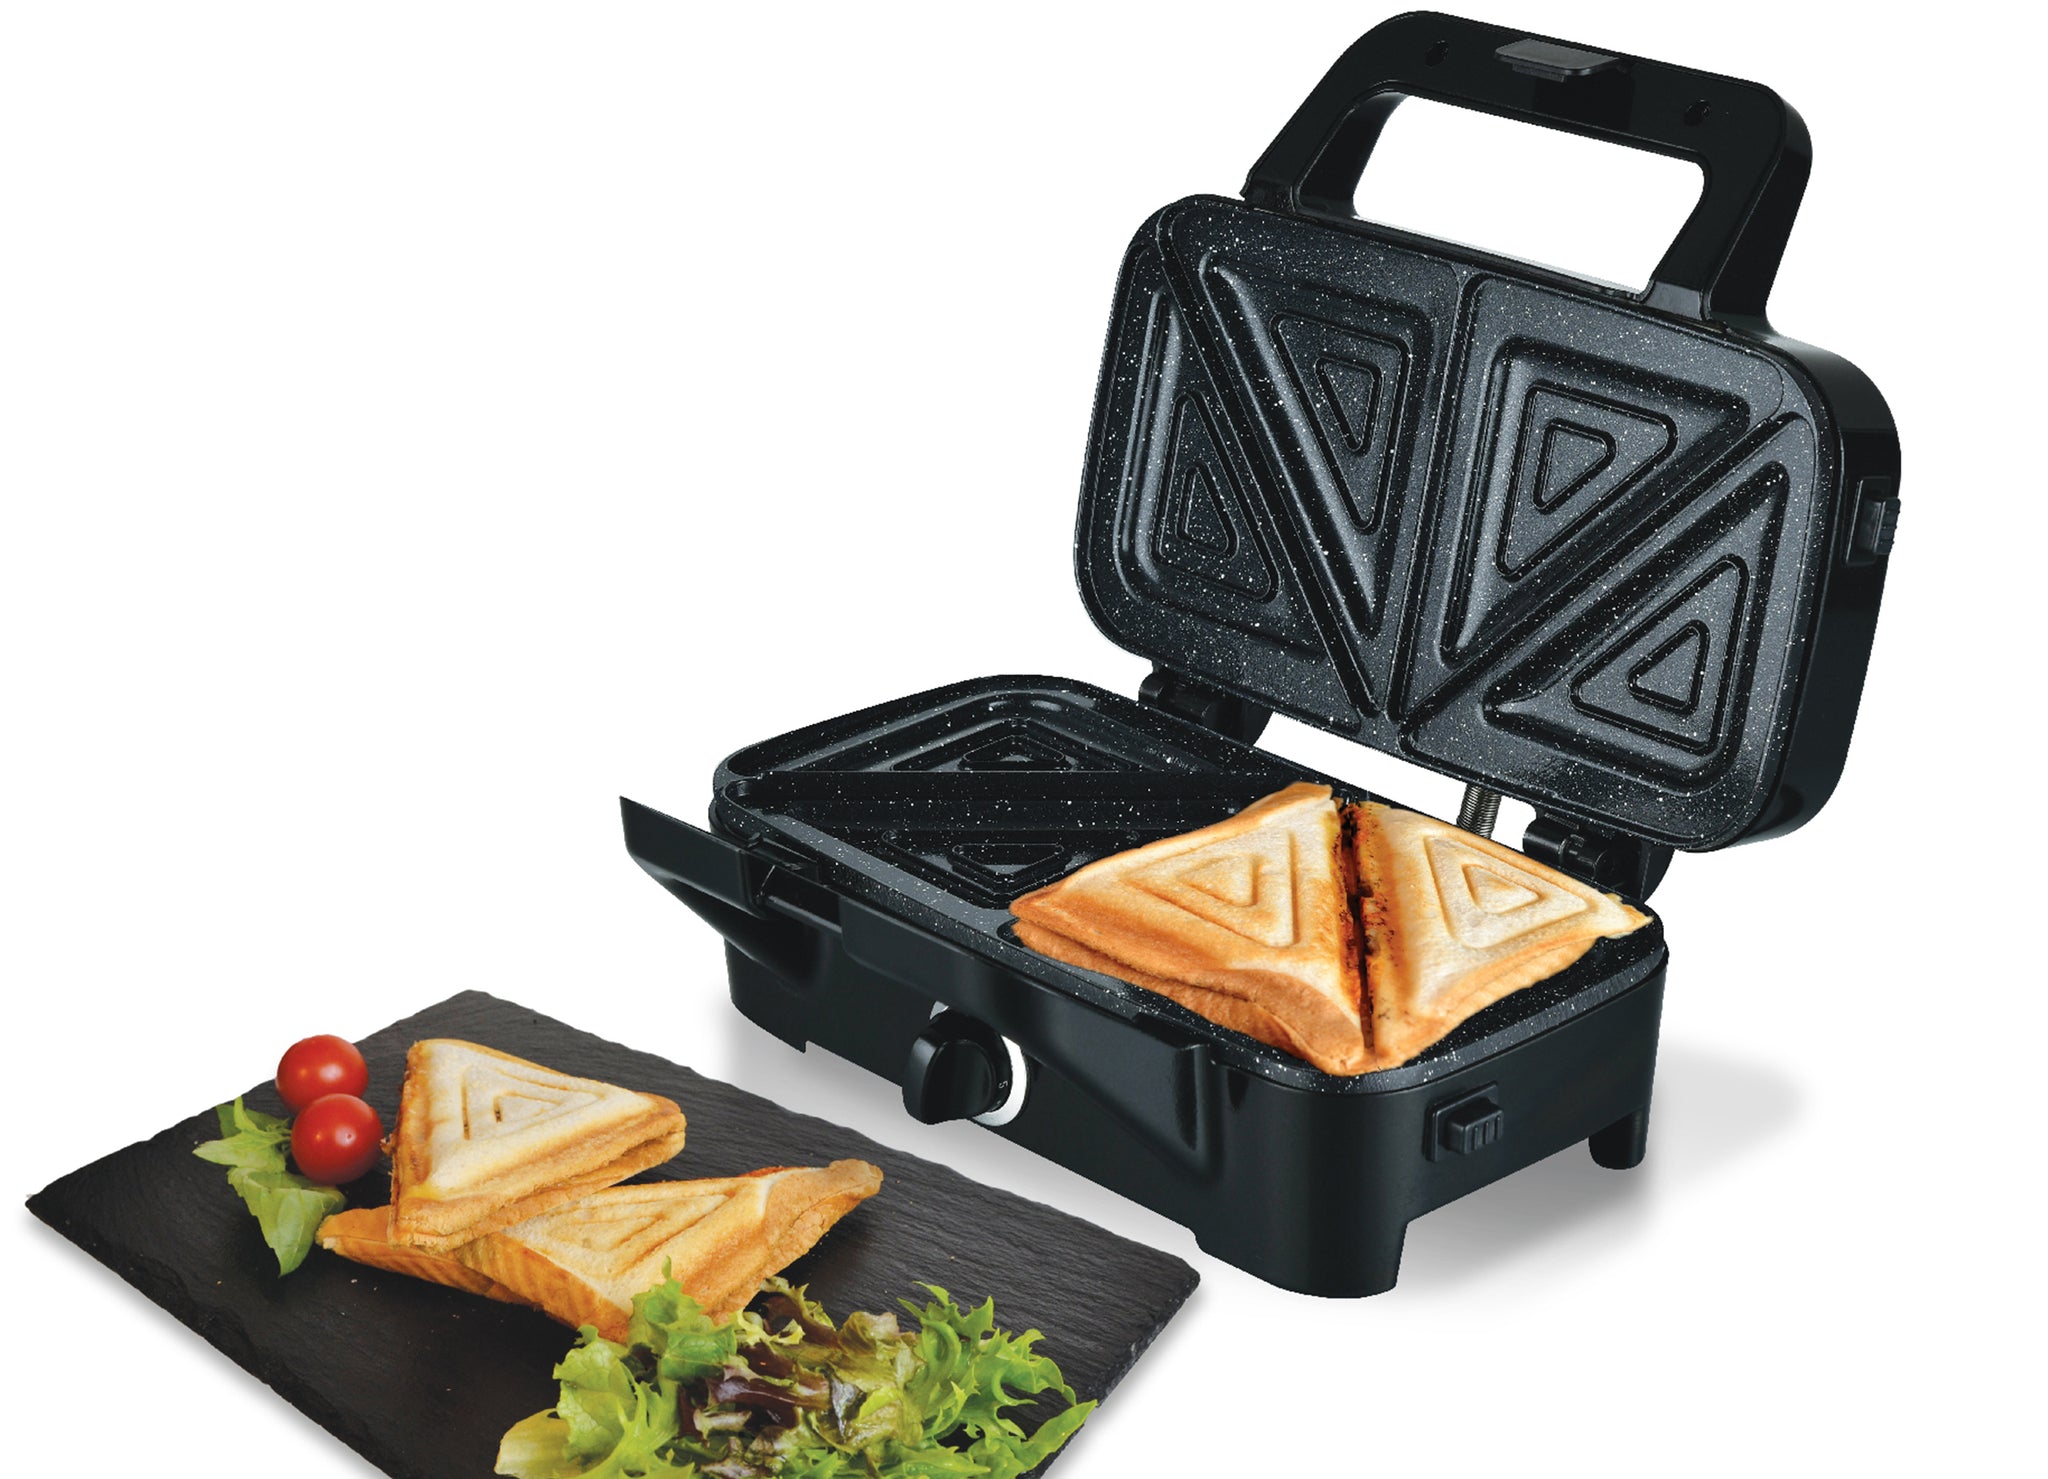 Salter Snack Maker 3-in-1 Sandwich Toaster Waffle Maker Grill Panini Press  900W 691043467914